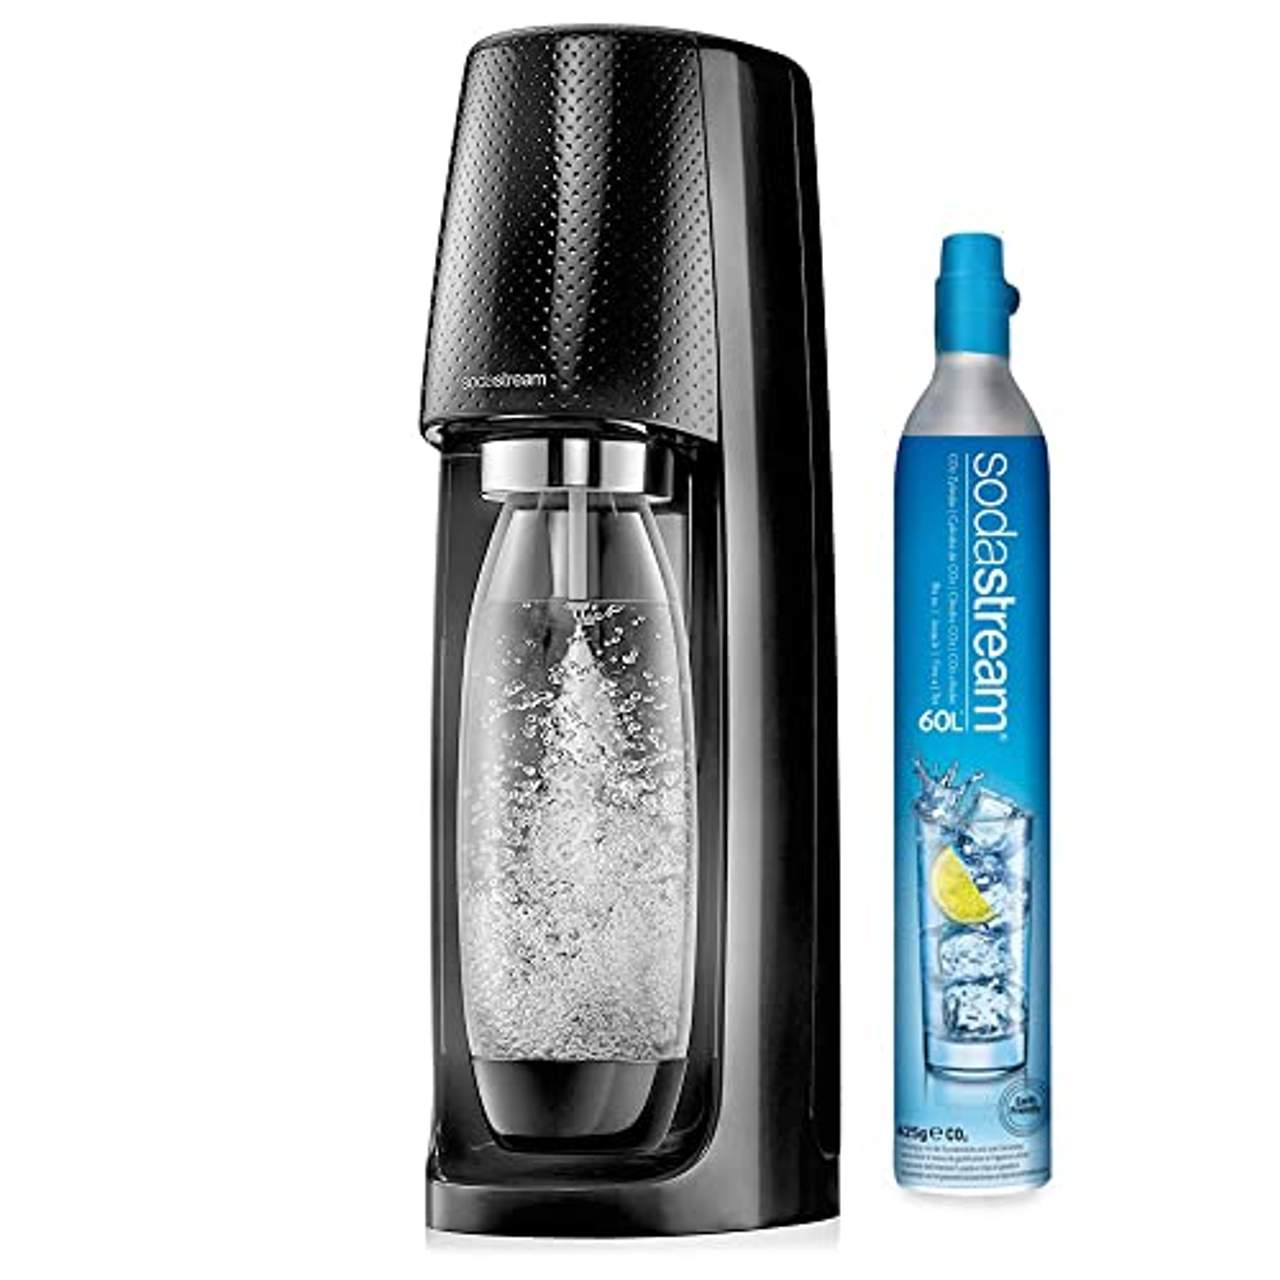 SodaStream Easy Wassersprudler